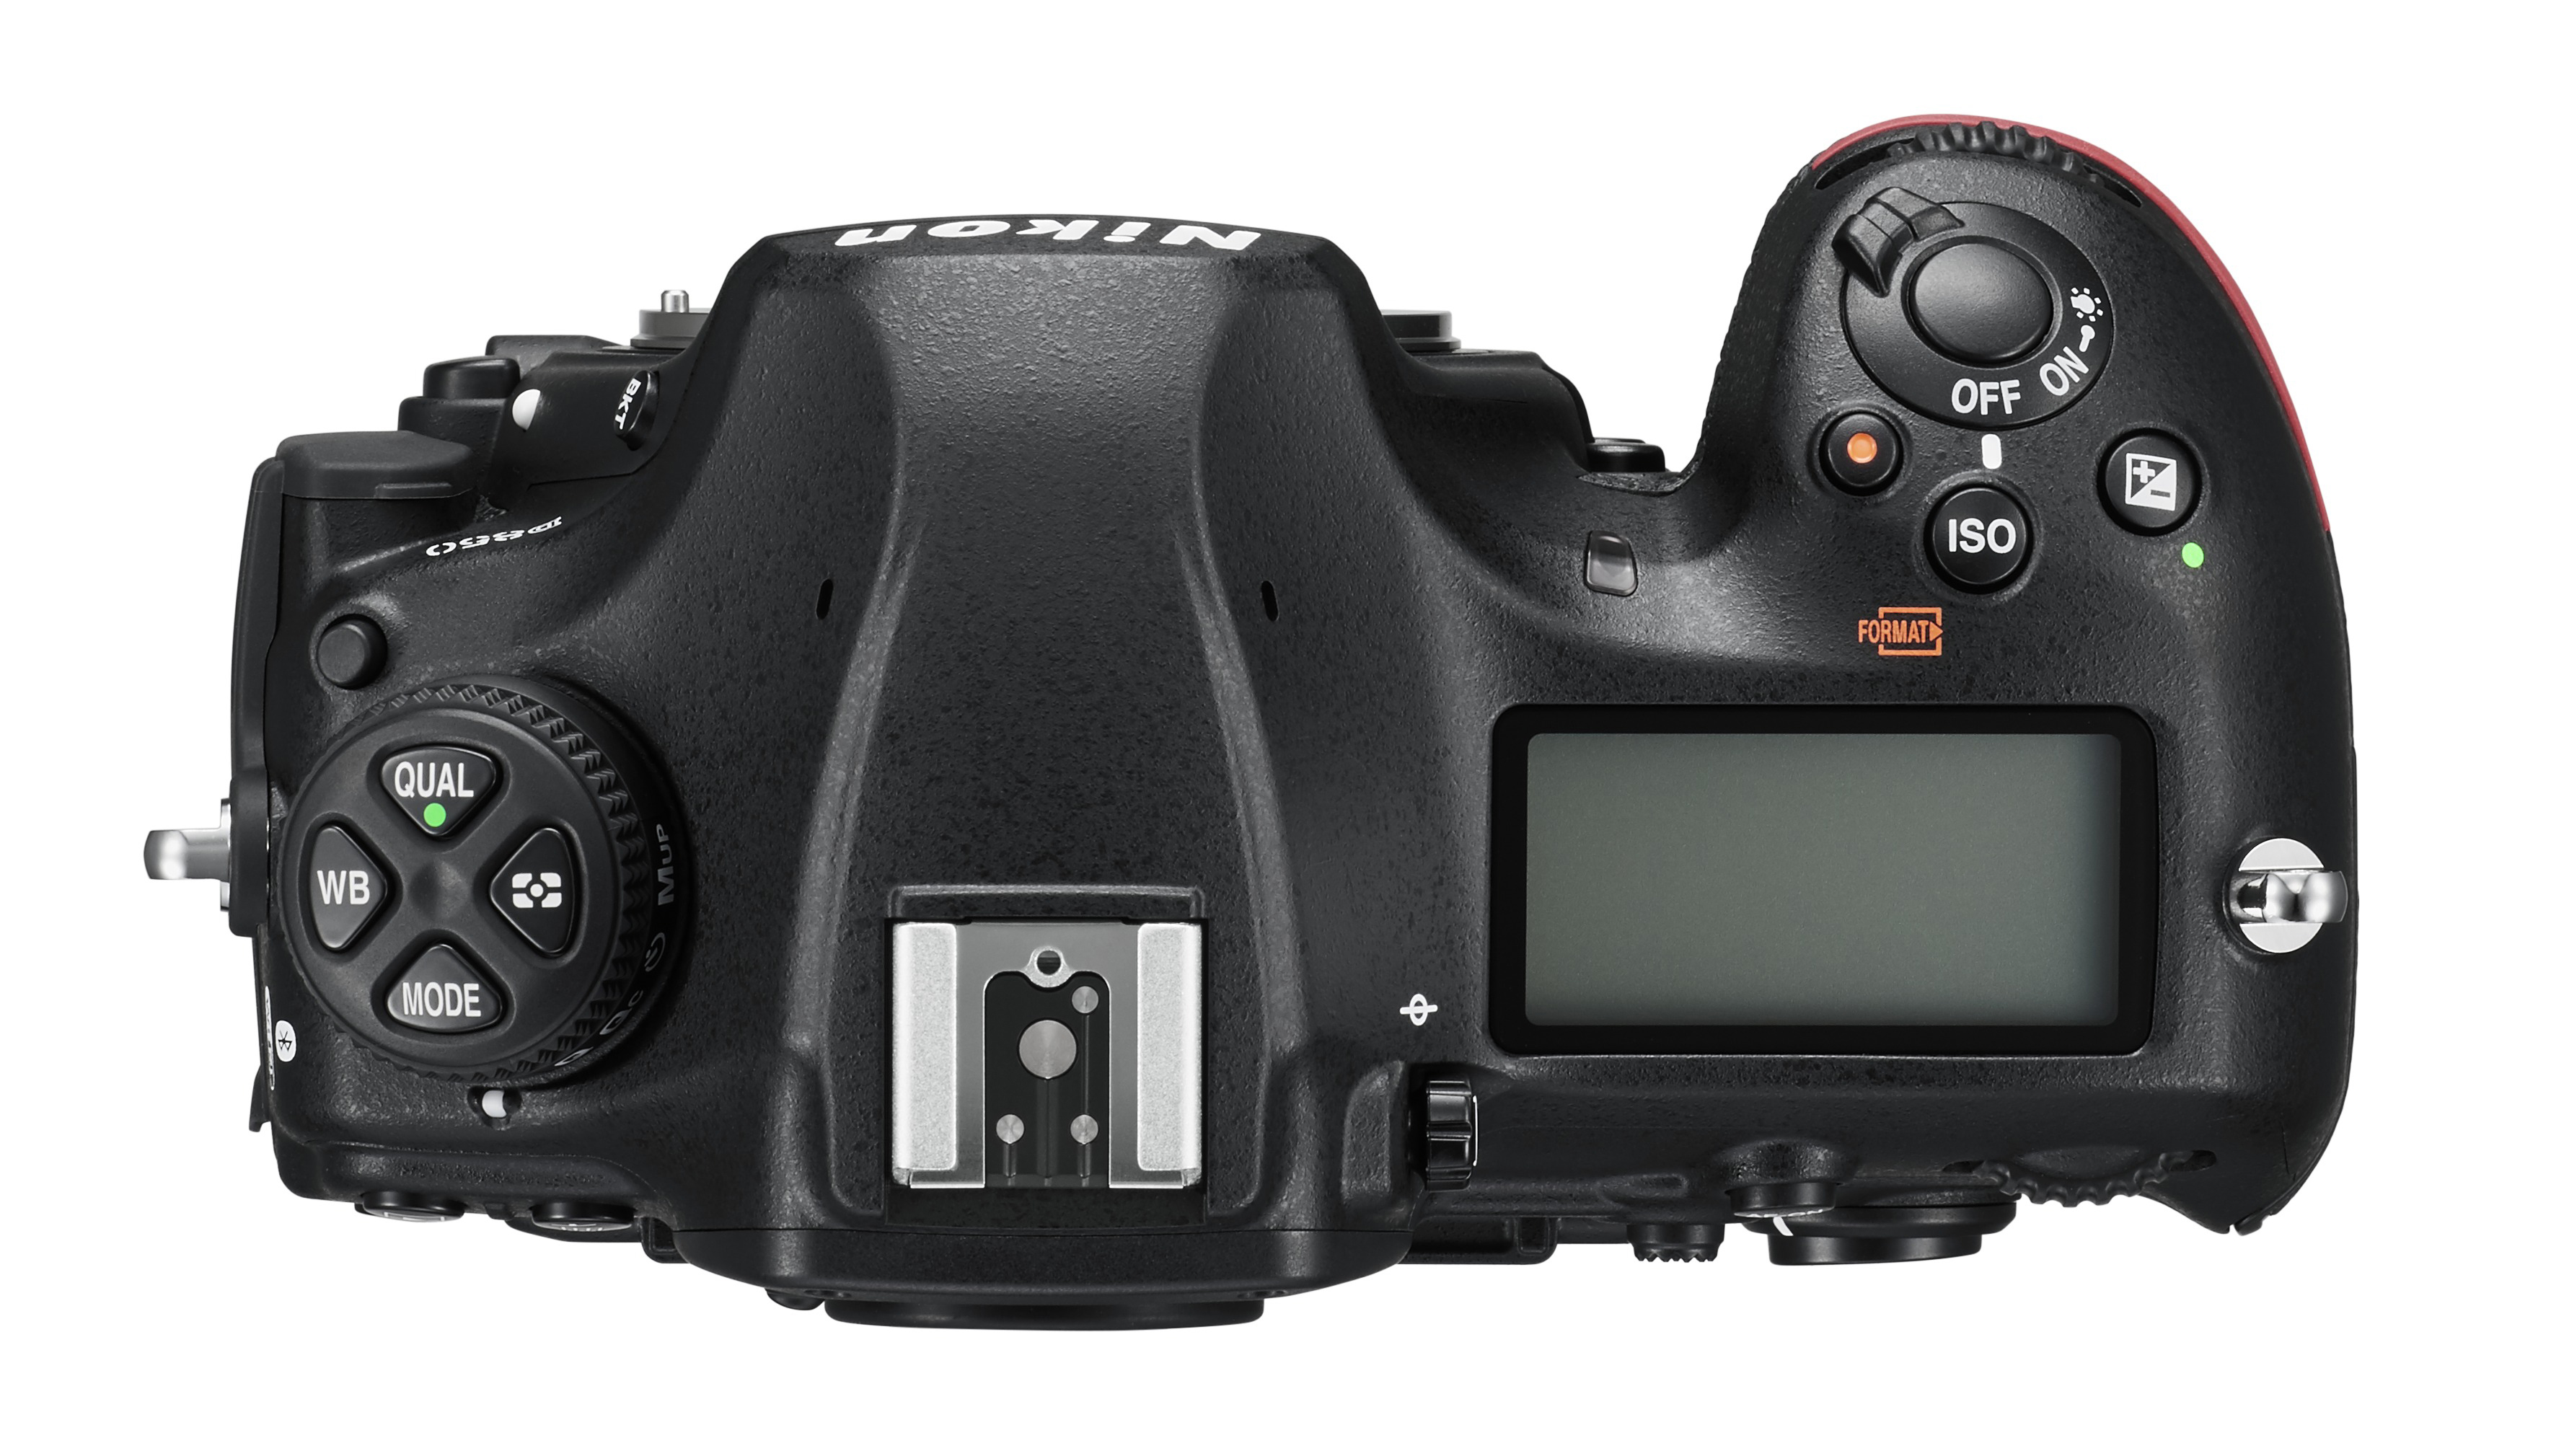 Spiegelreflexkamera, Body WLAN, Display, Megapixel, D850 Touchscreen Schwarz NIKON 45,7